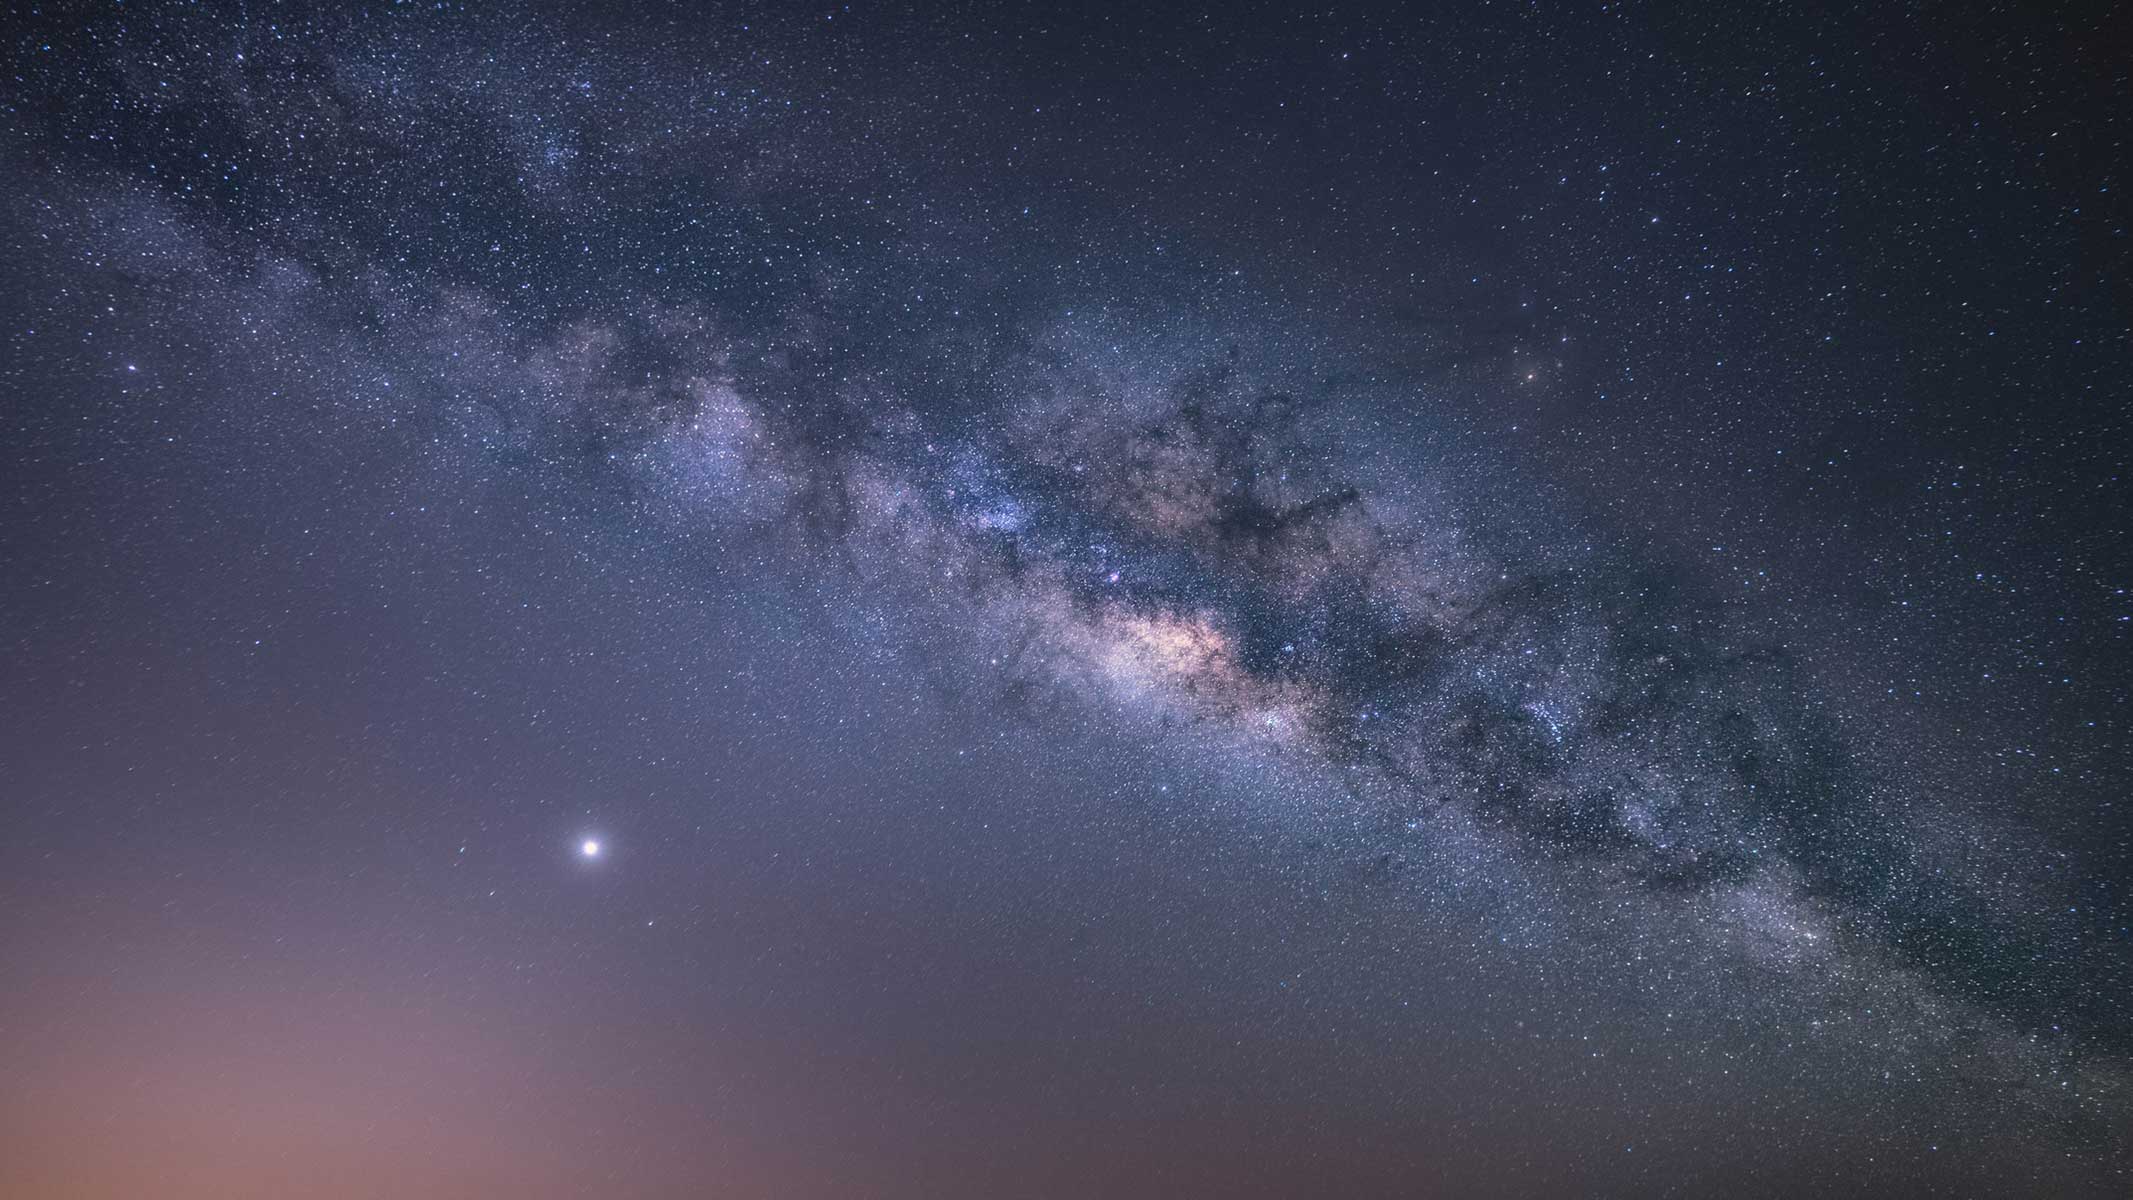 Milky way galaxy stretching across the night sky.